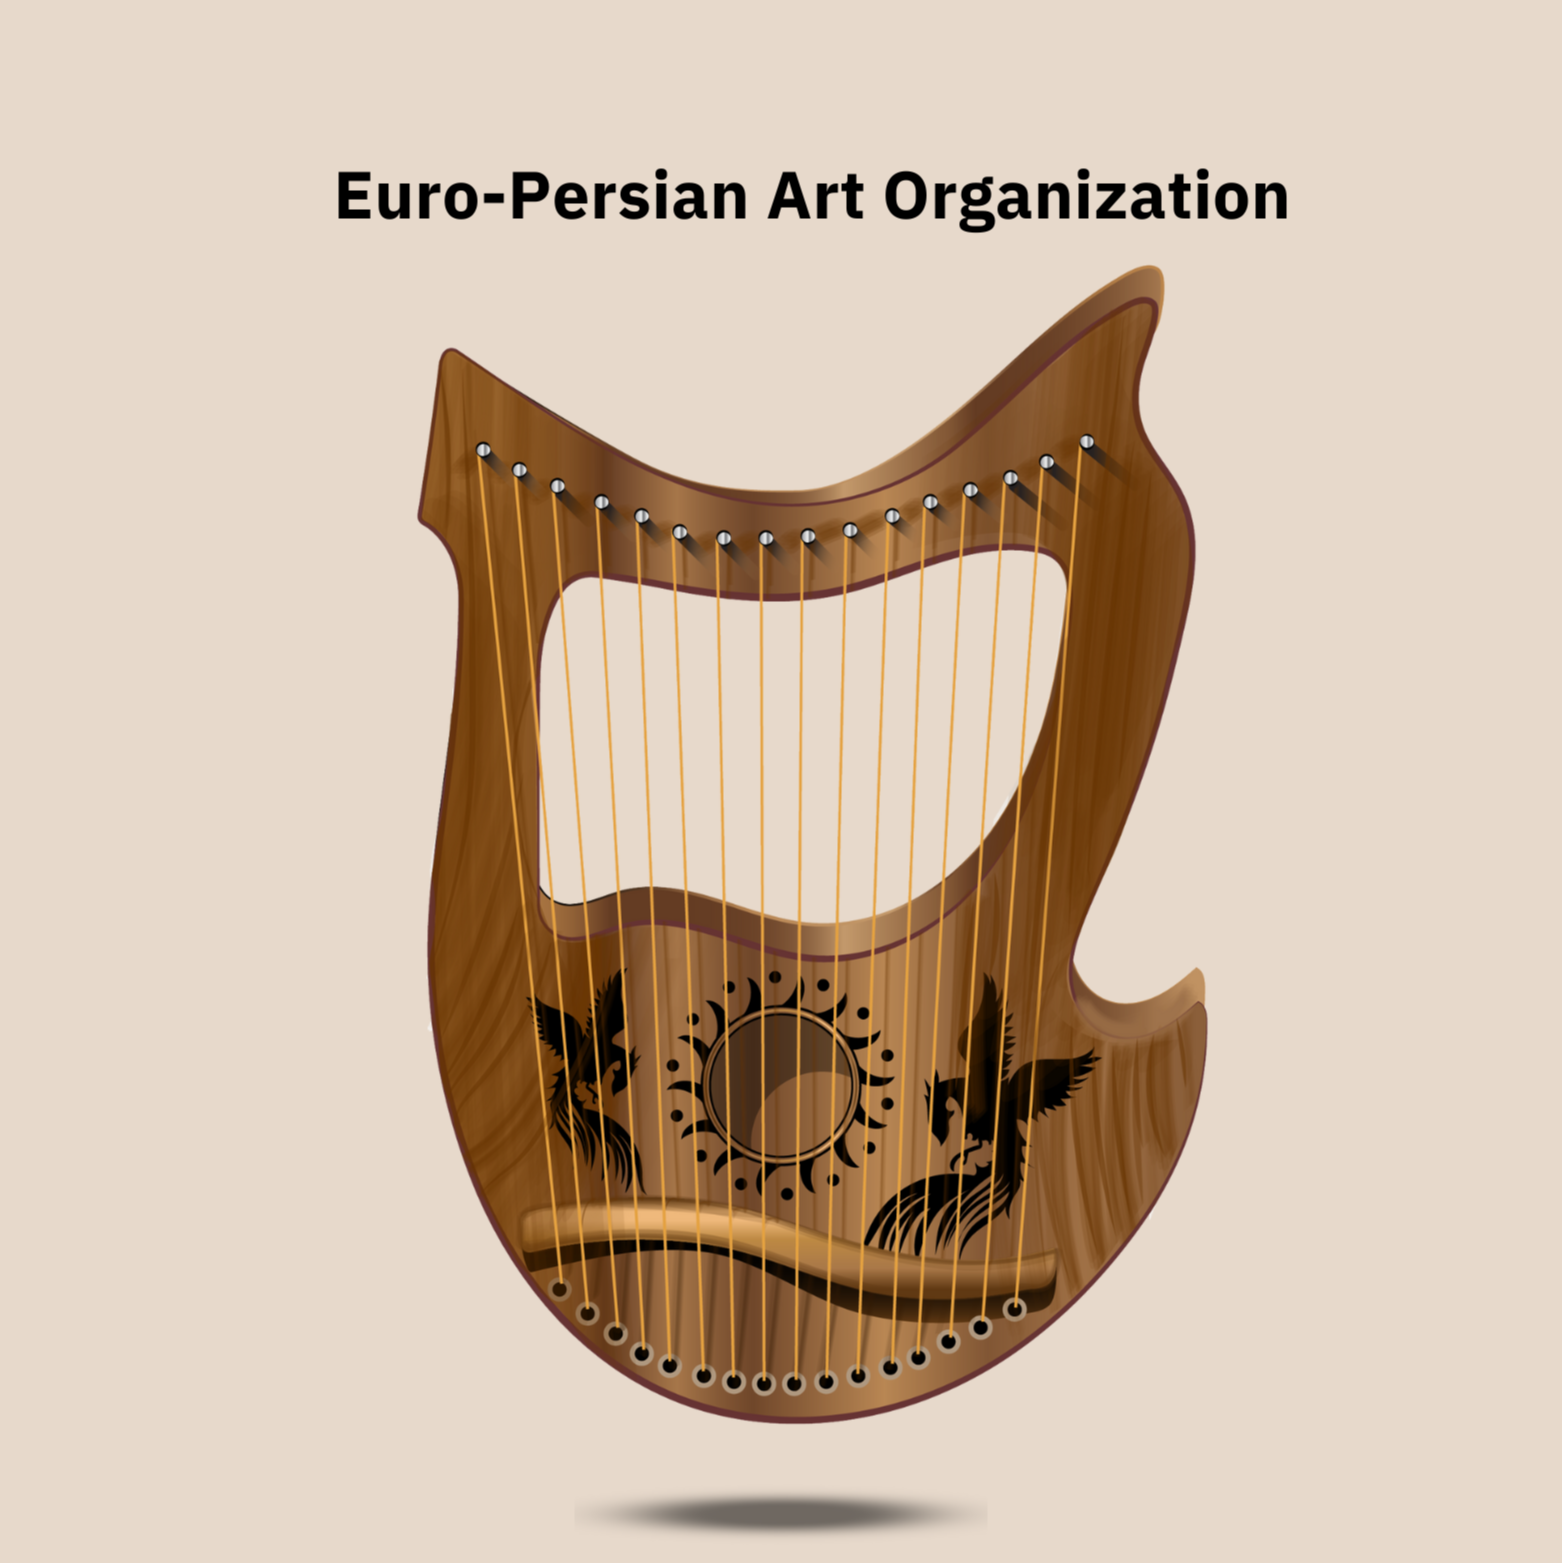 Euro-Persian Art Organization logo